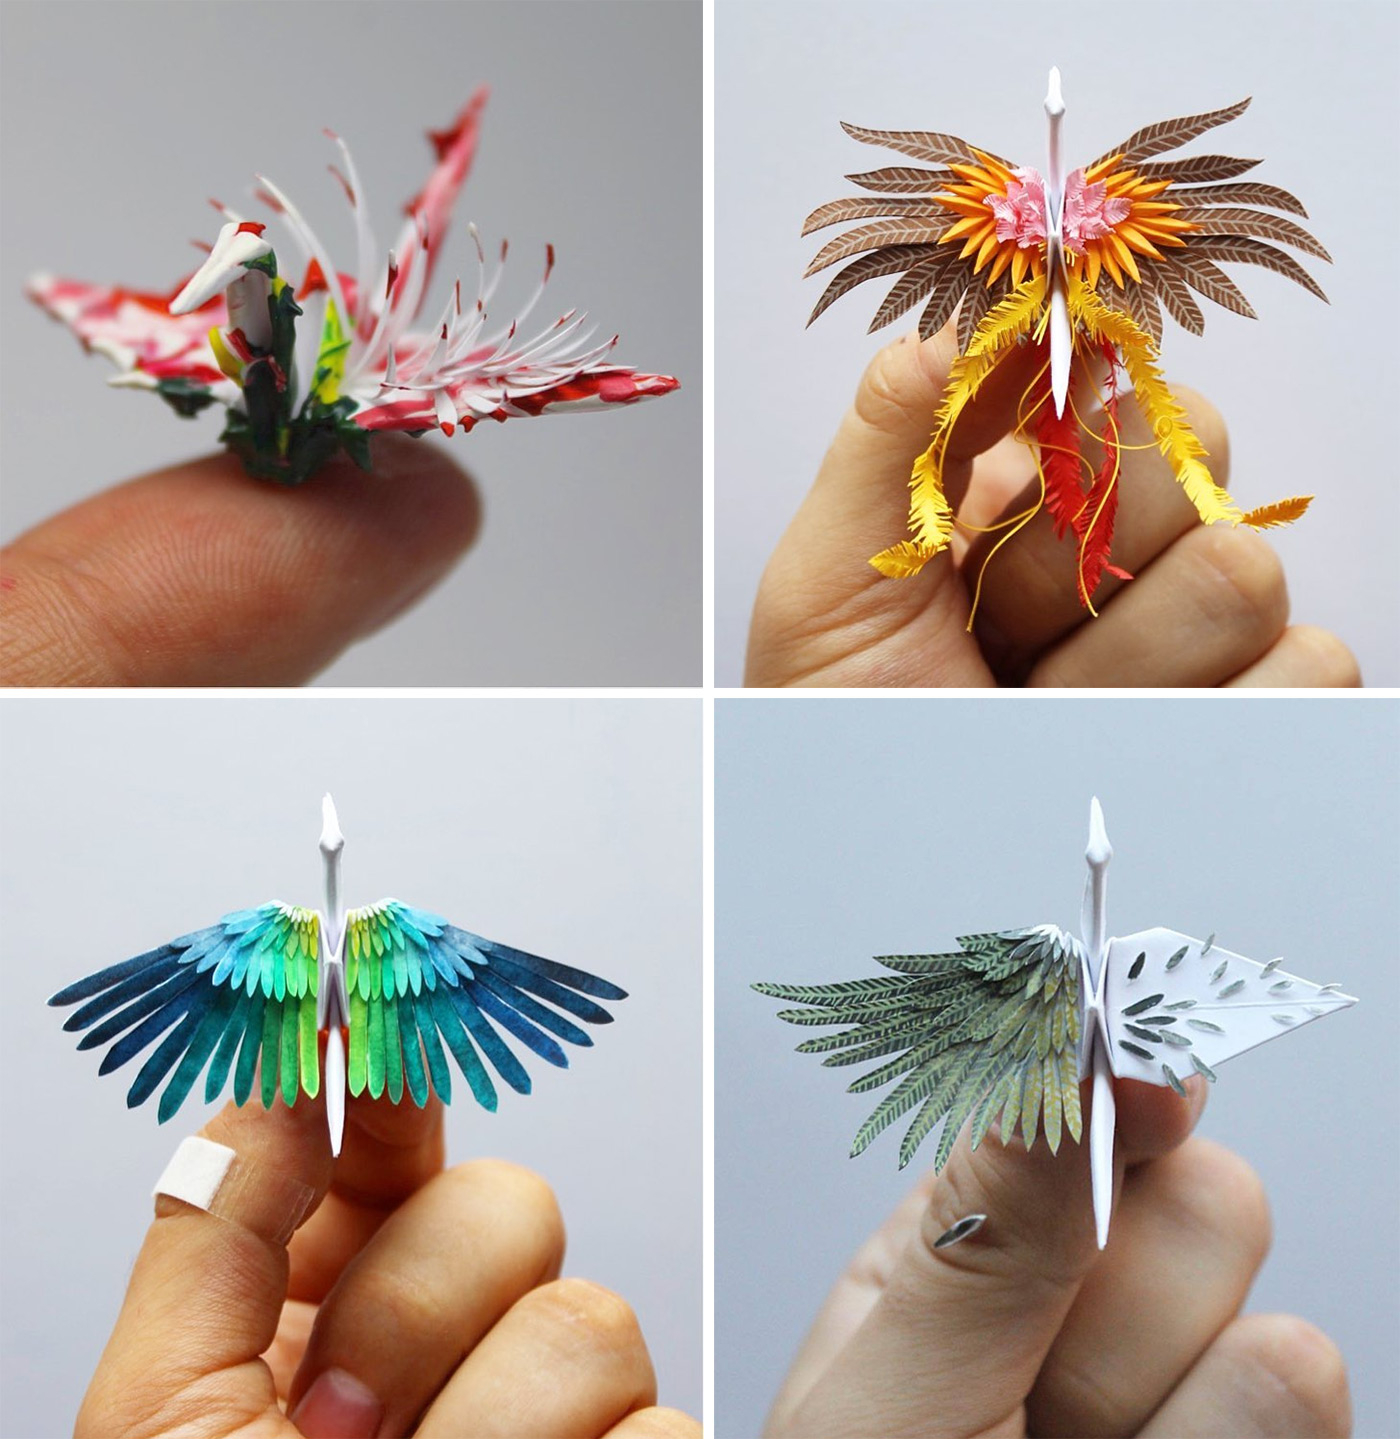 Paper Crane Origami Cristian Marianciuc Creates A New Decorated Origami Paper Crane